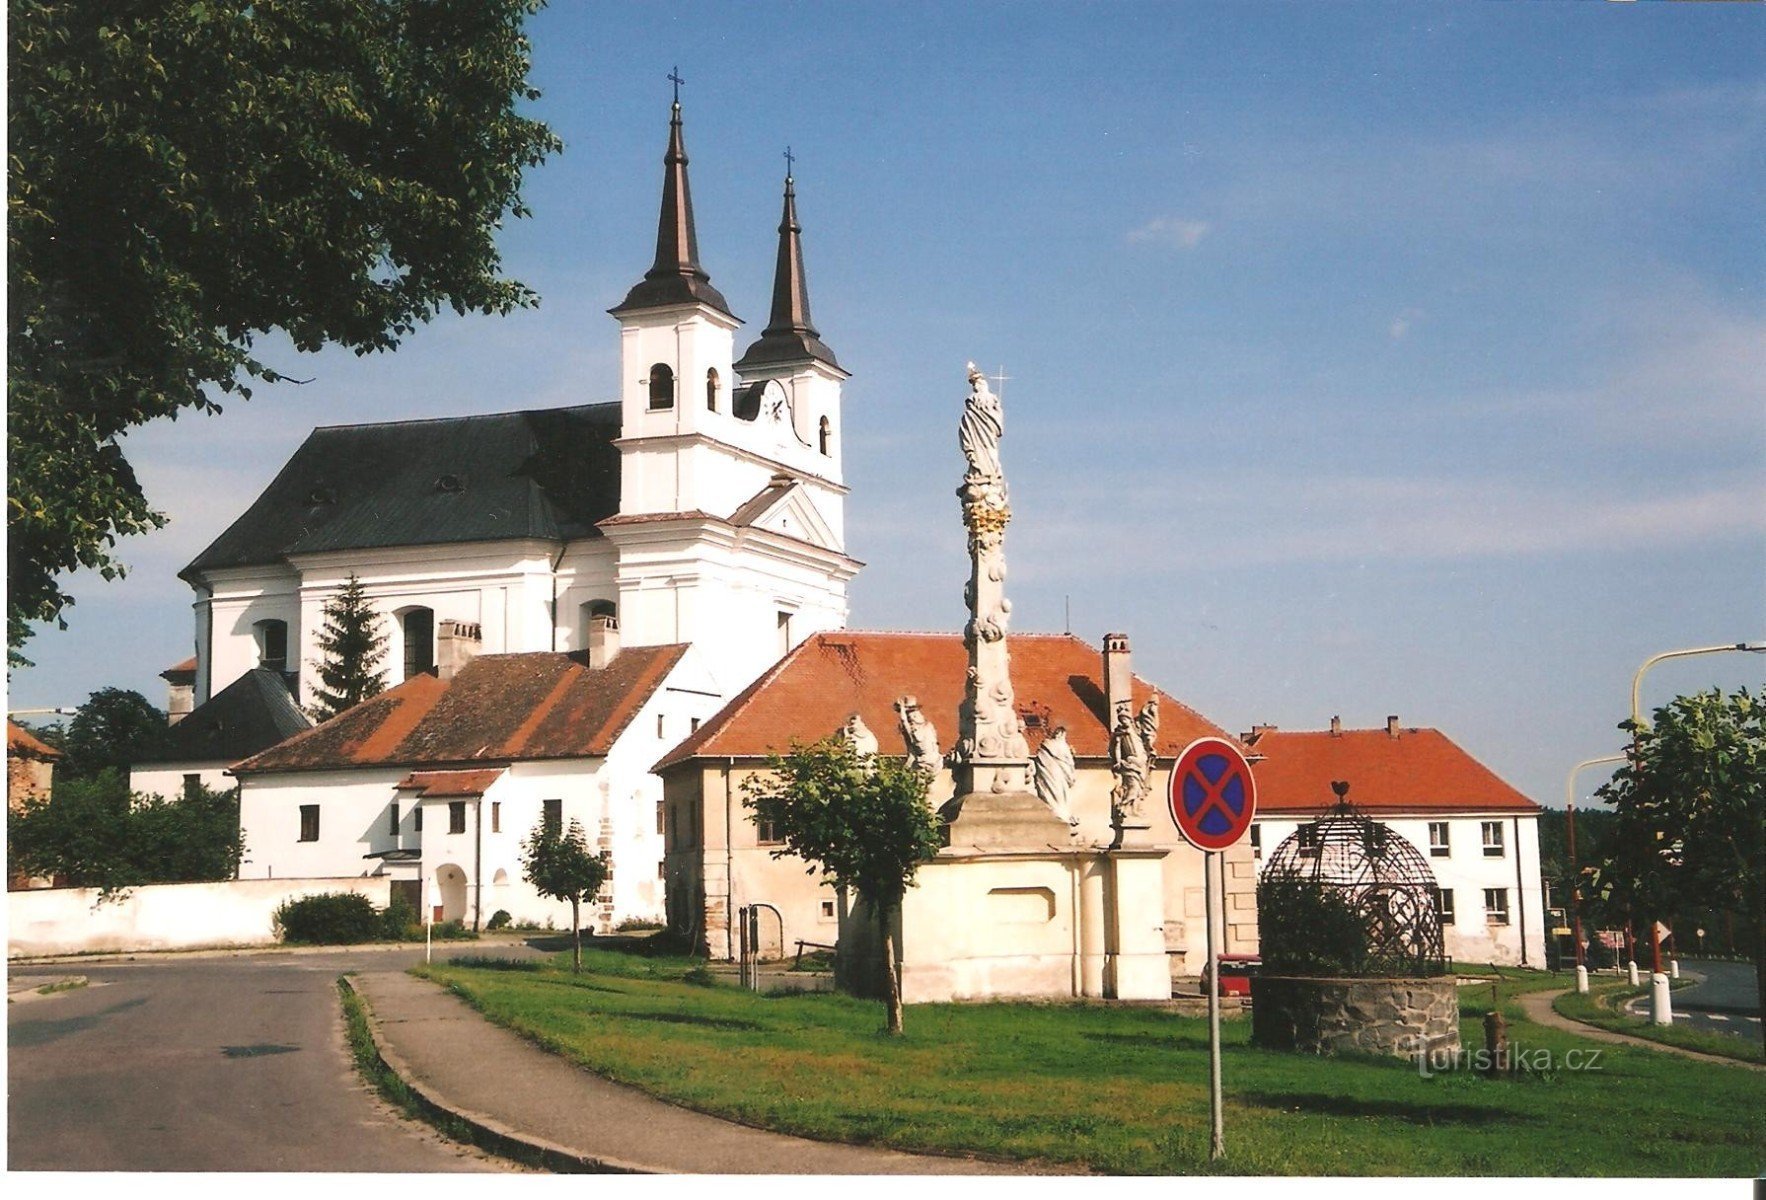 Дрнголец - історична частина смт